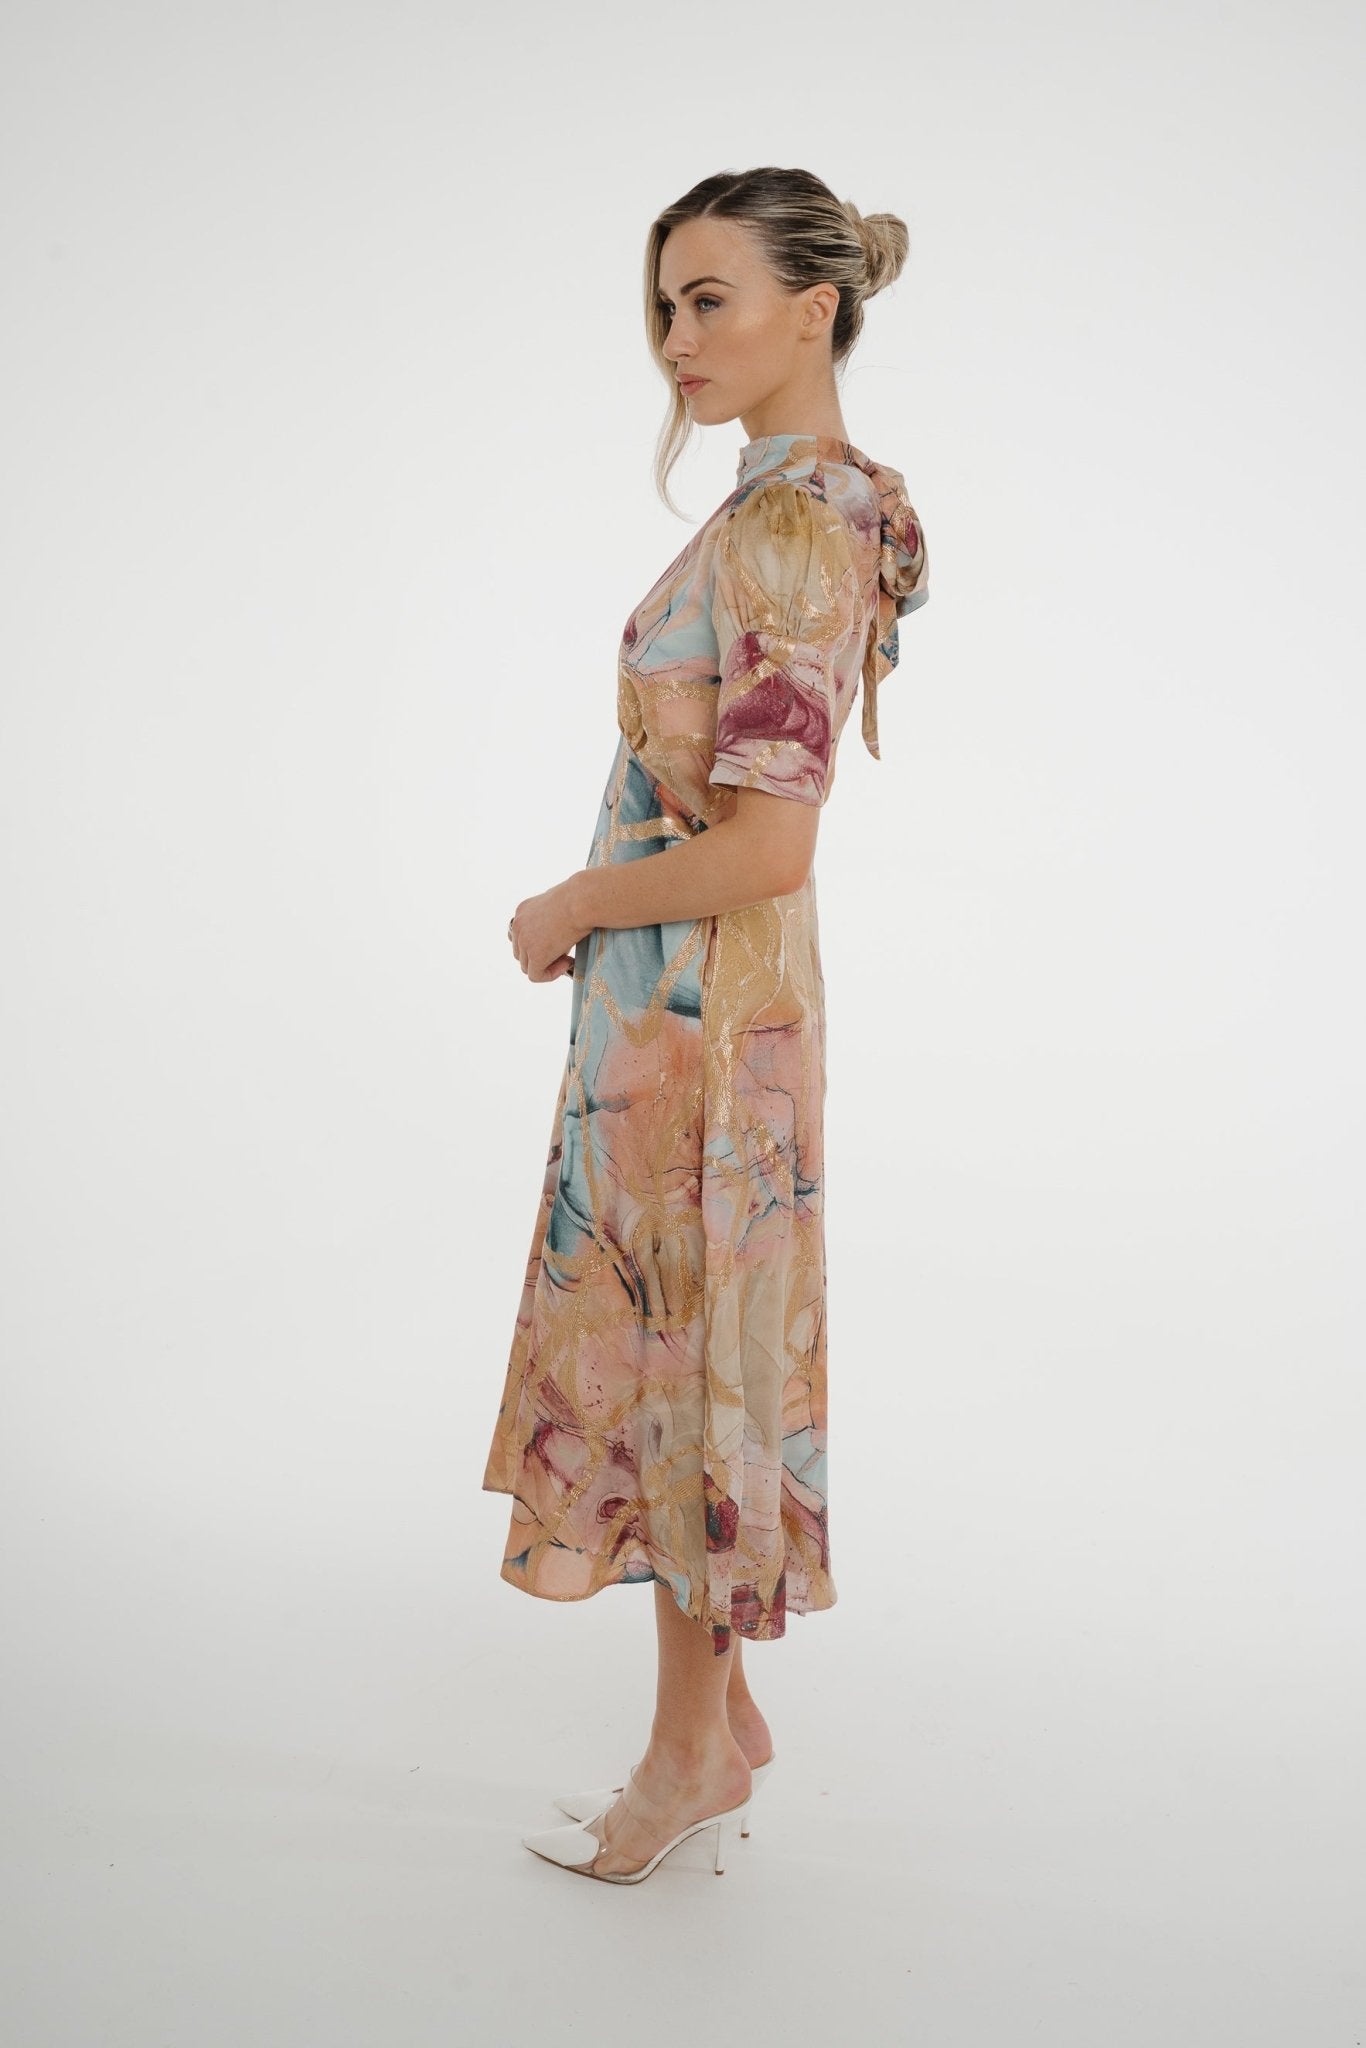 Celine Marble Print Dress In Blush - The Walk in Wardrobe